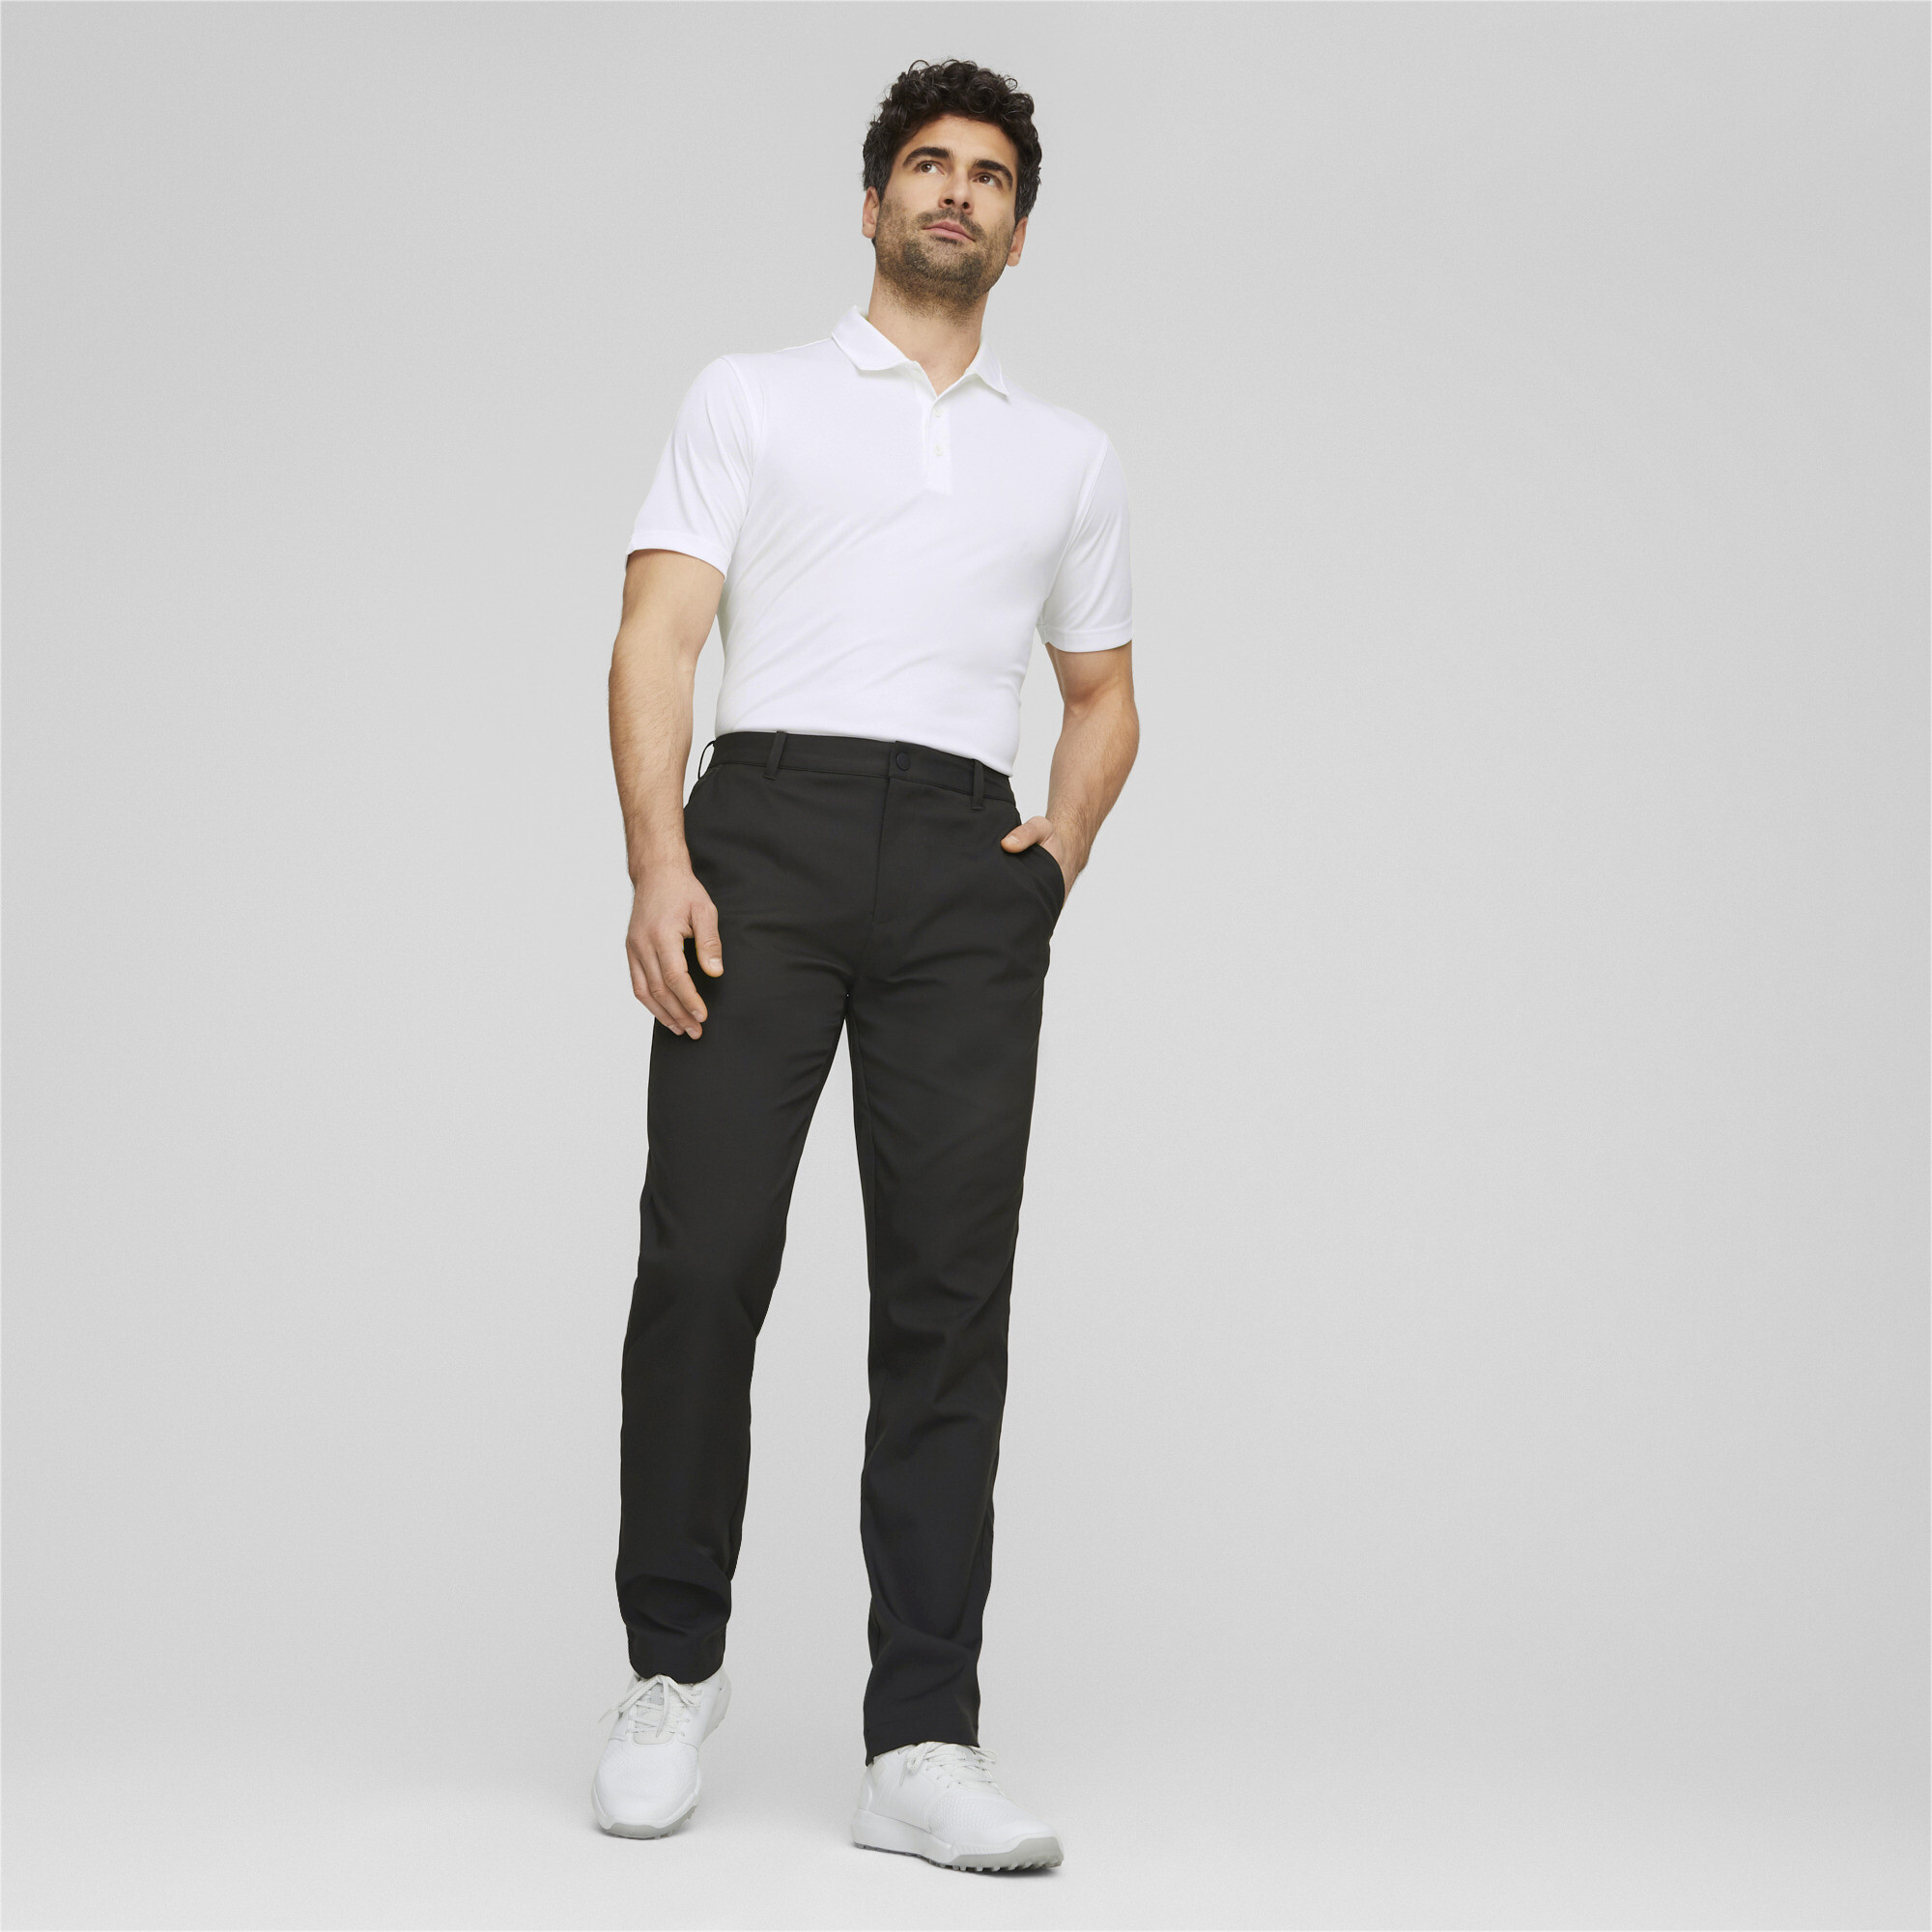 Men's Puma Dealer Golf Pants, Black, Size 35/30, Clothing